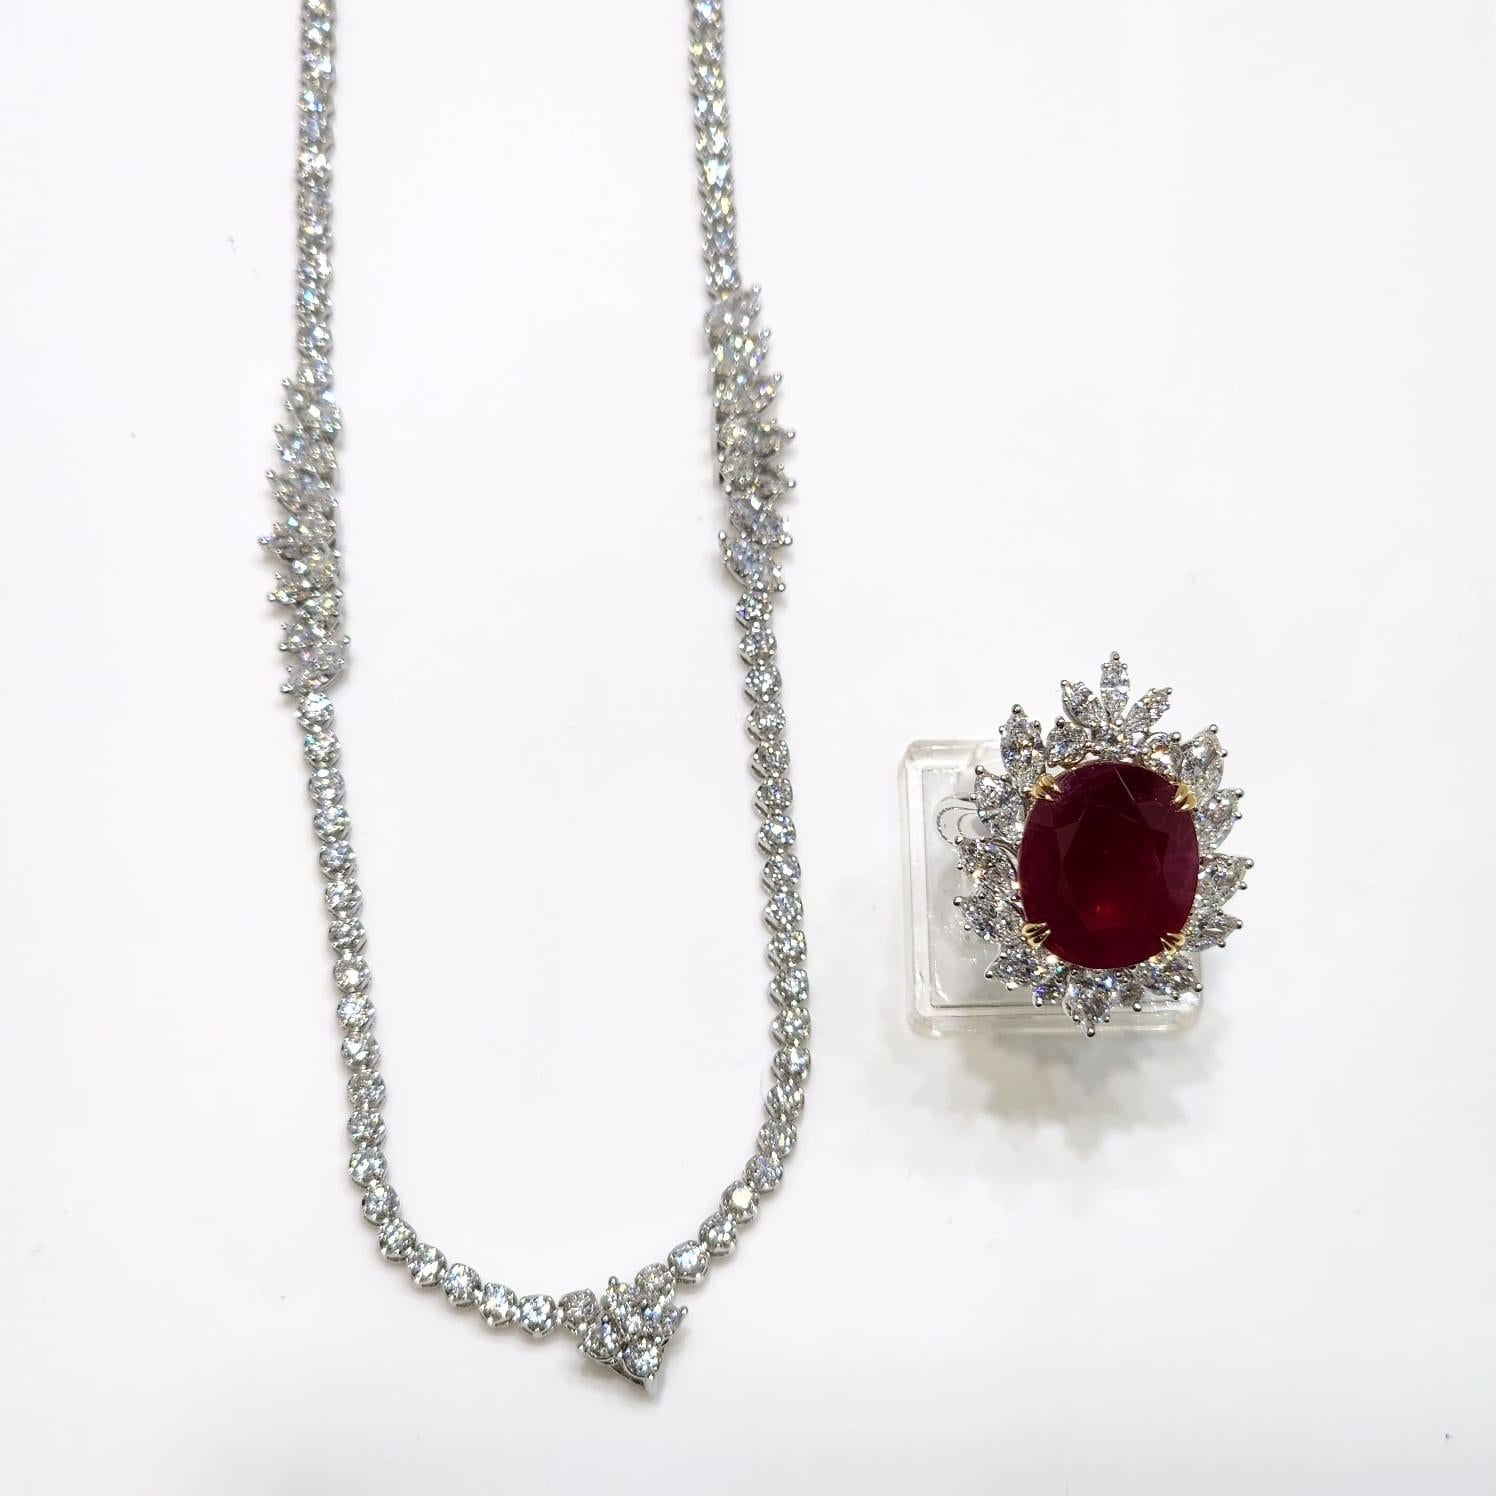 8.61 Carat Burma Ruby Diamond Necklace in 18 Karat White Gold For Sale 5